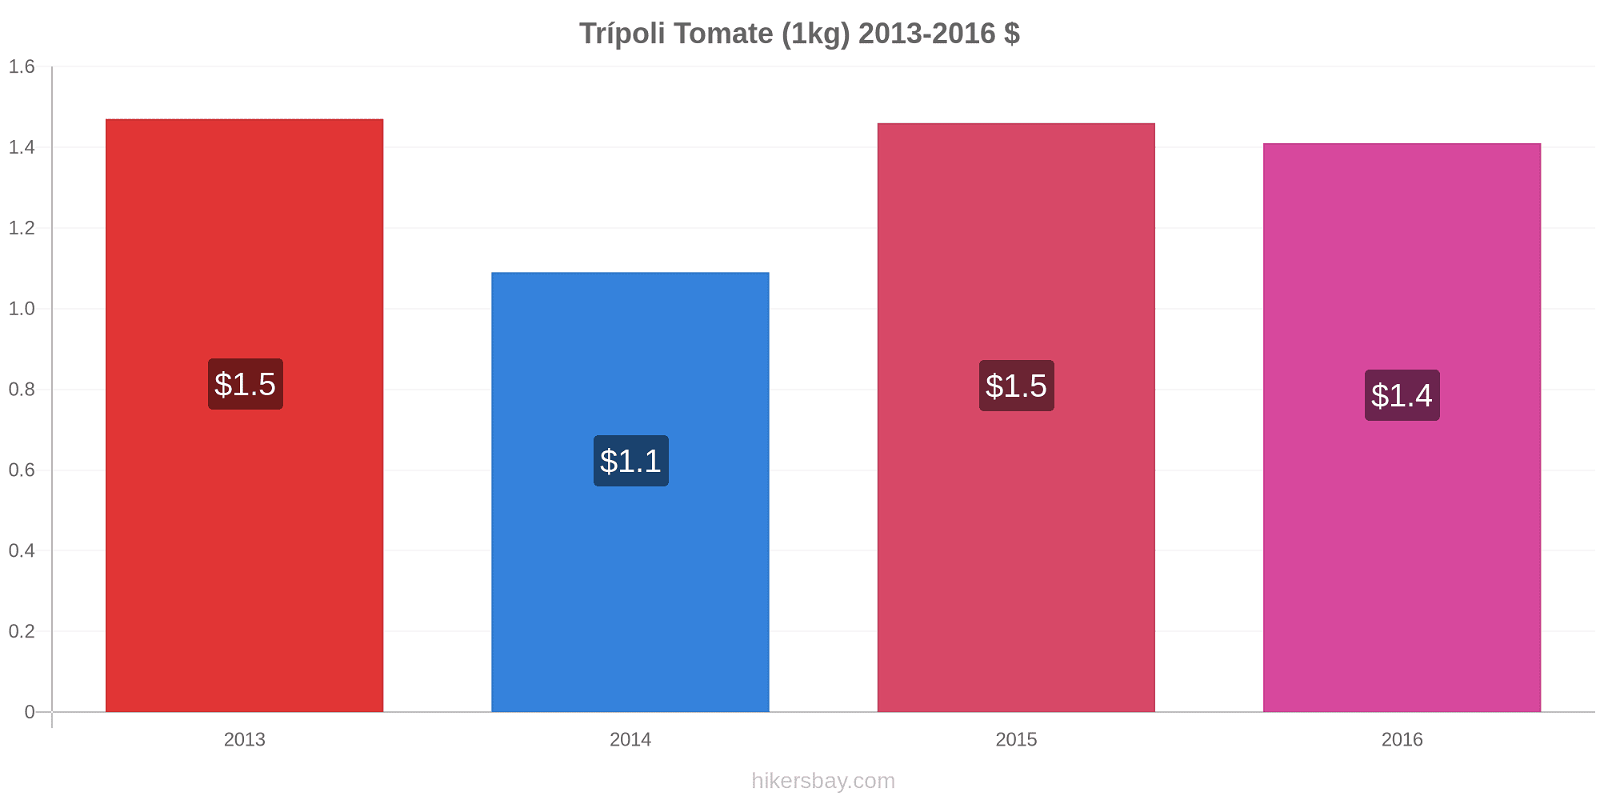 Trípoli variação de preço Tomate (1kg) hikersbay.com